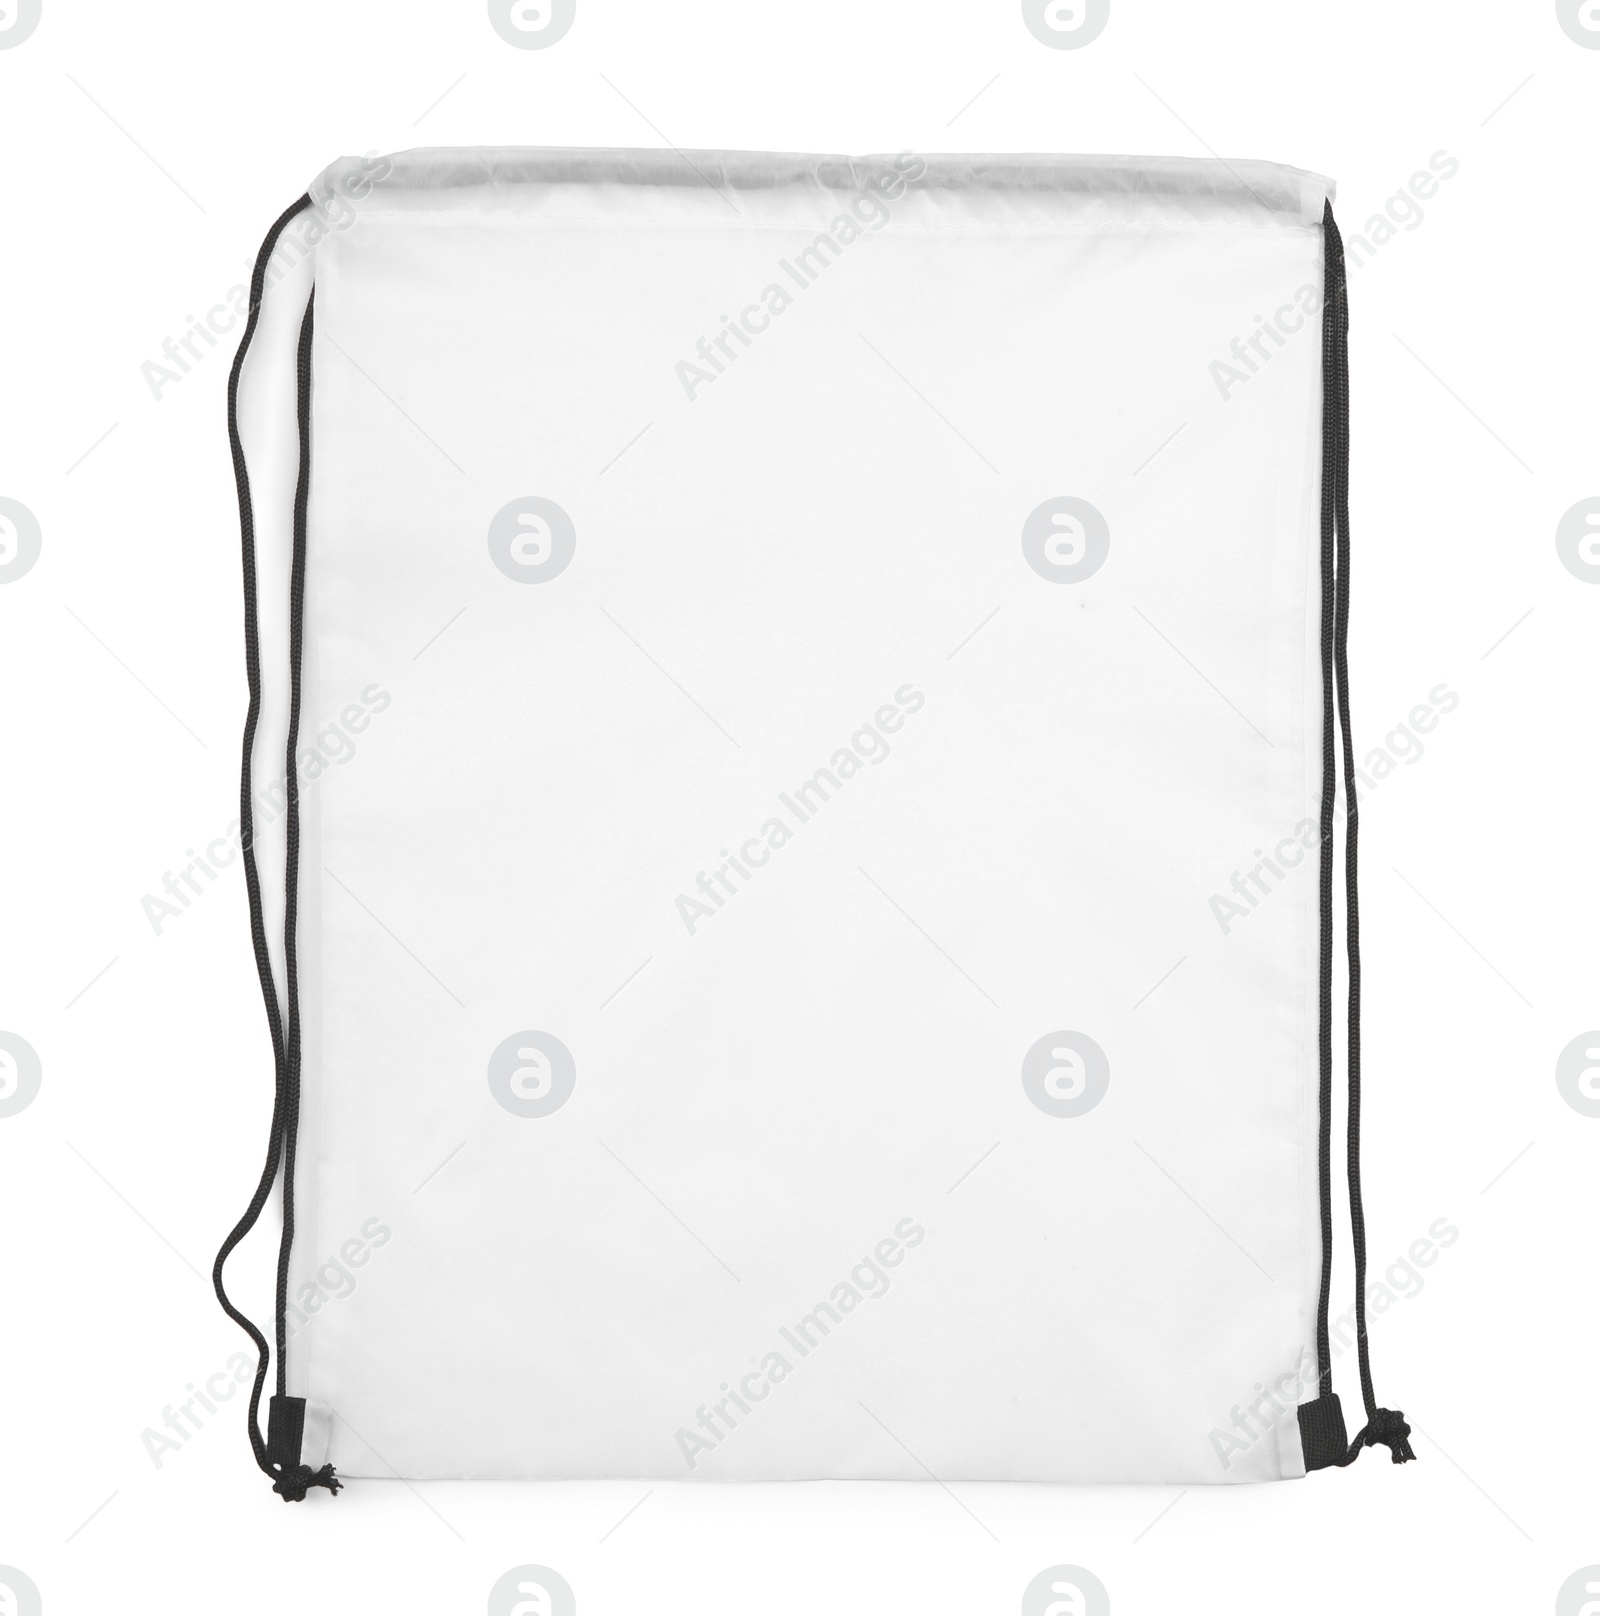 Photo of One empty drawstring bag isolated on white